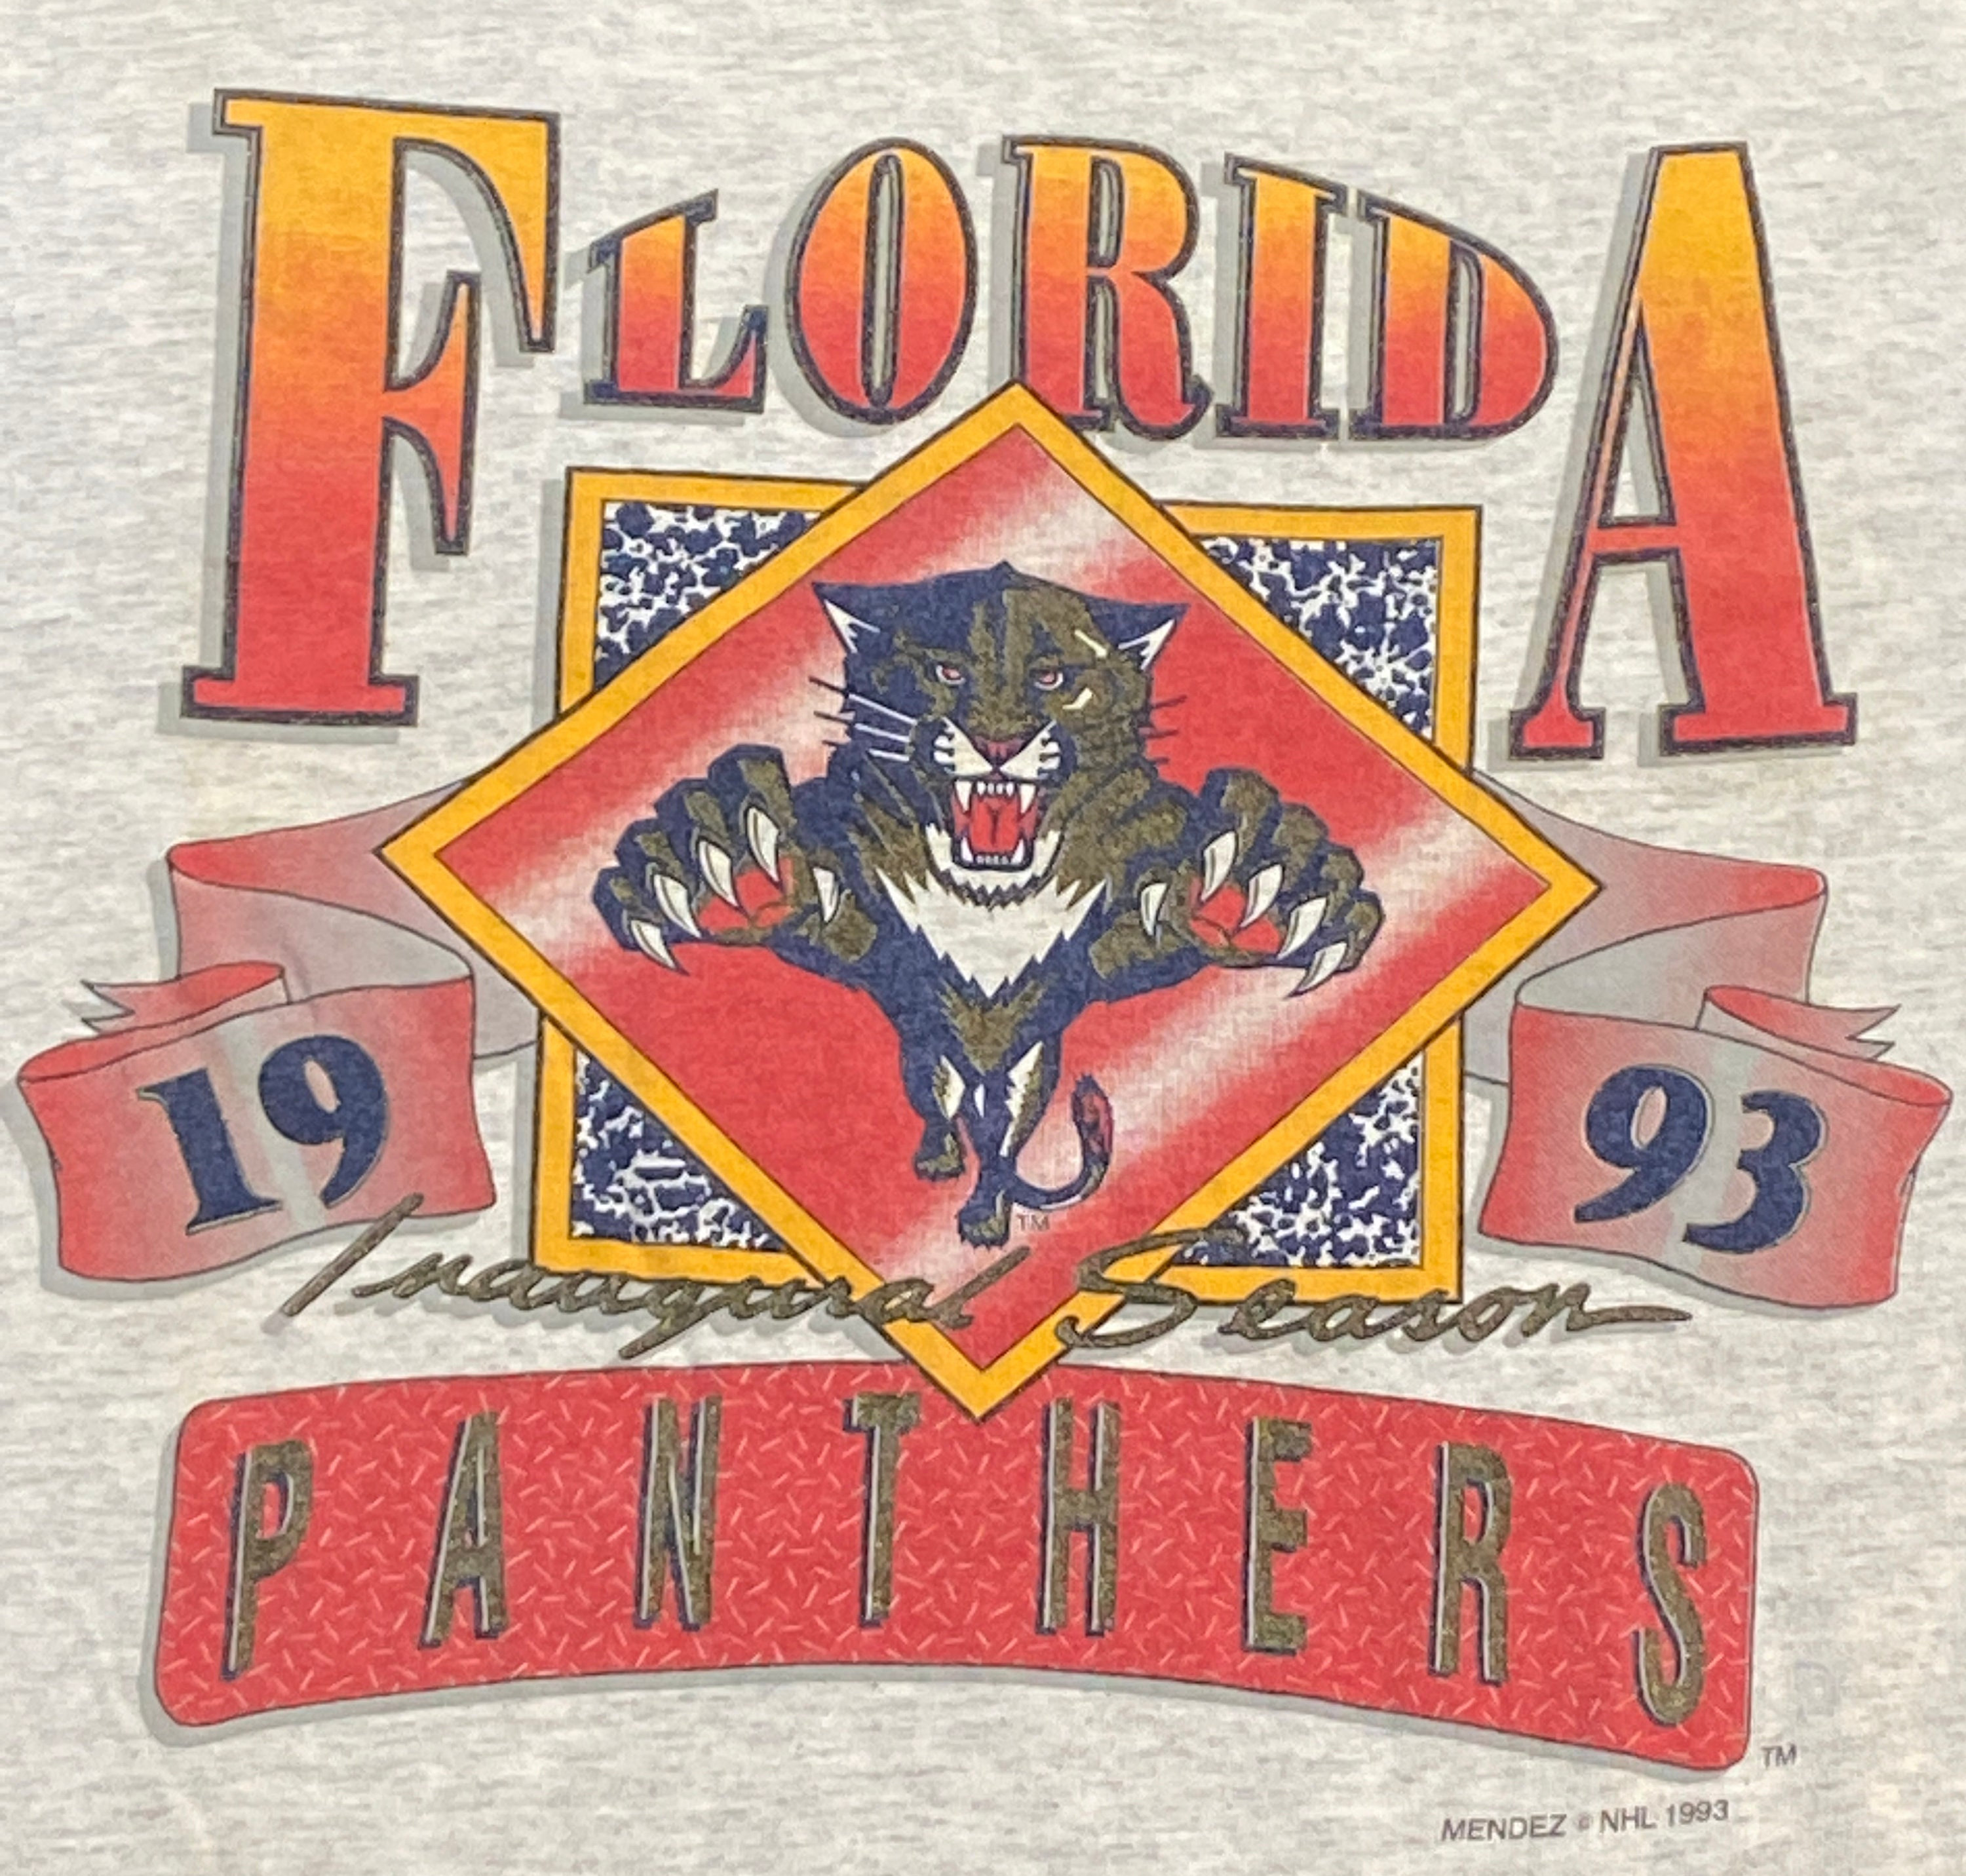 CustomCat Florida Panthers Vintage NHL T-Shirt Red / XL